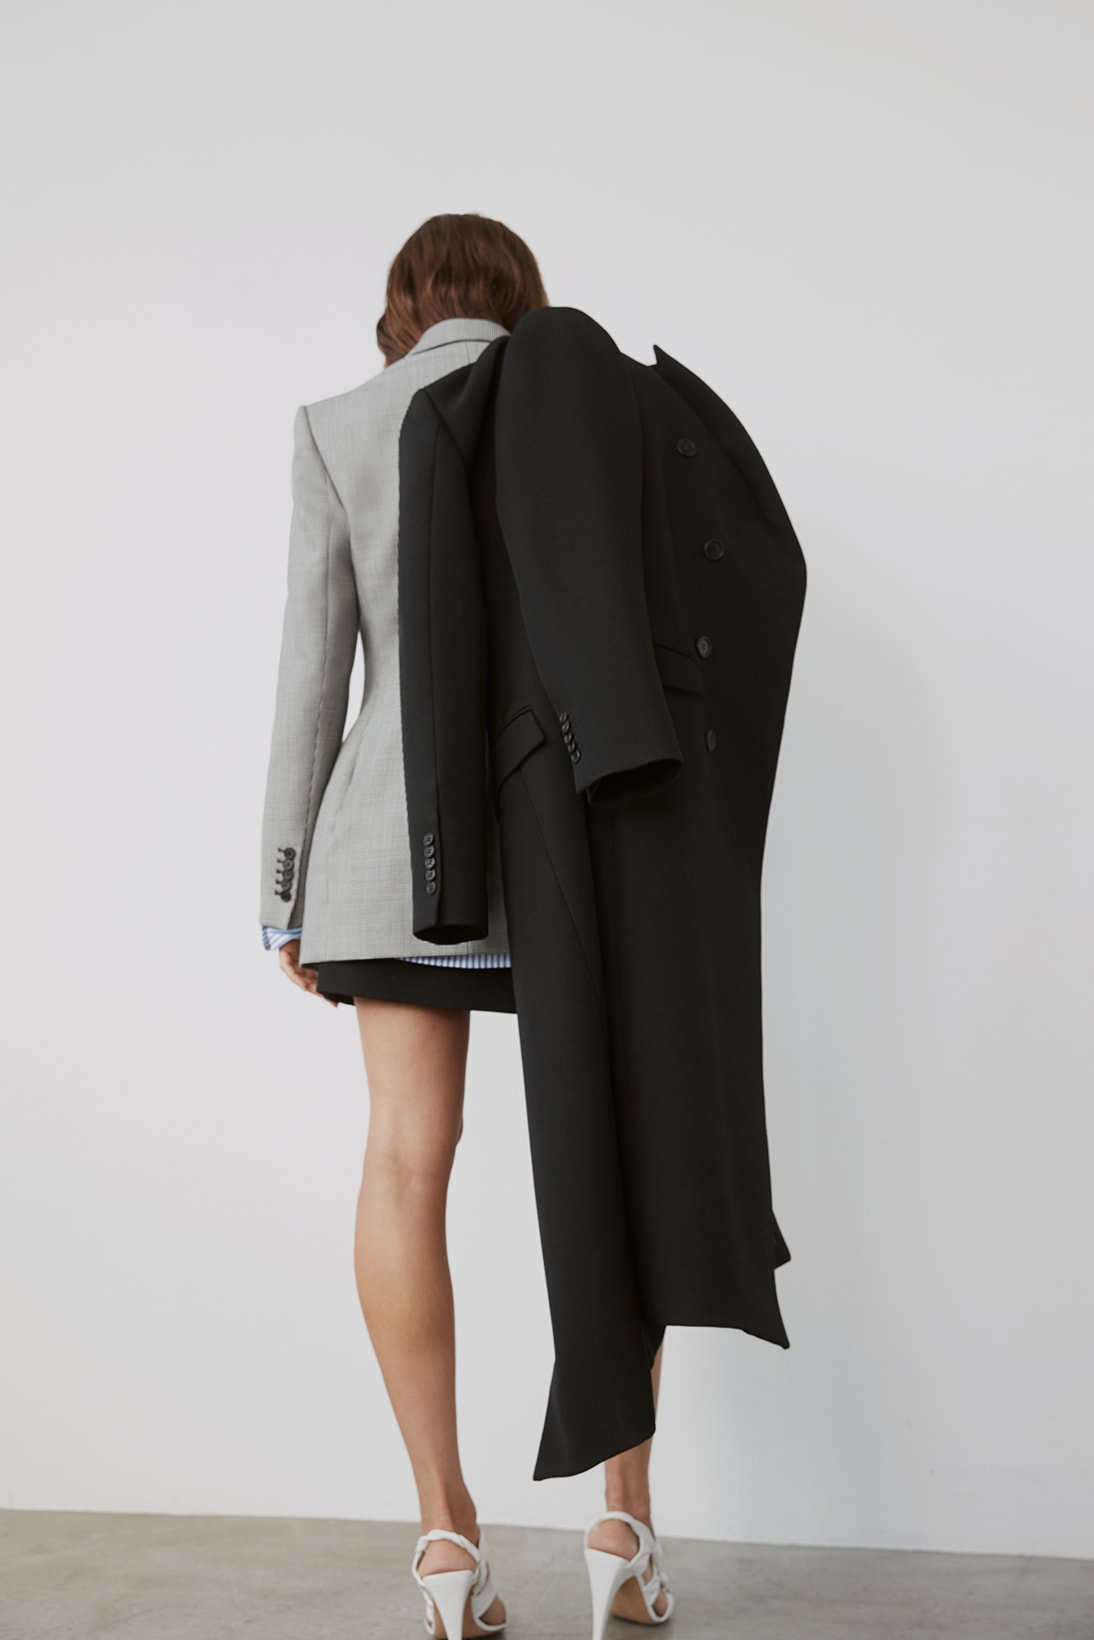 Wardrobe.NYC is the Newest Modern Essentials Brand – CR Fashion Book